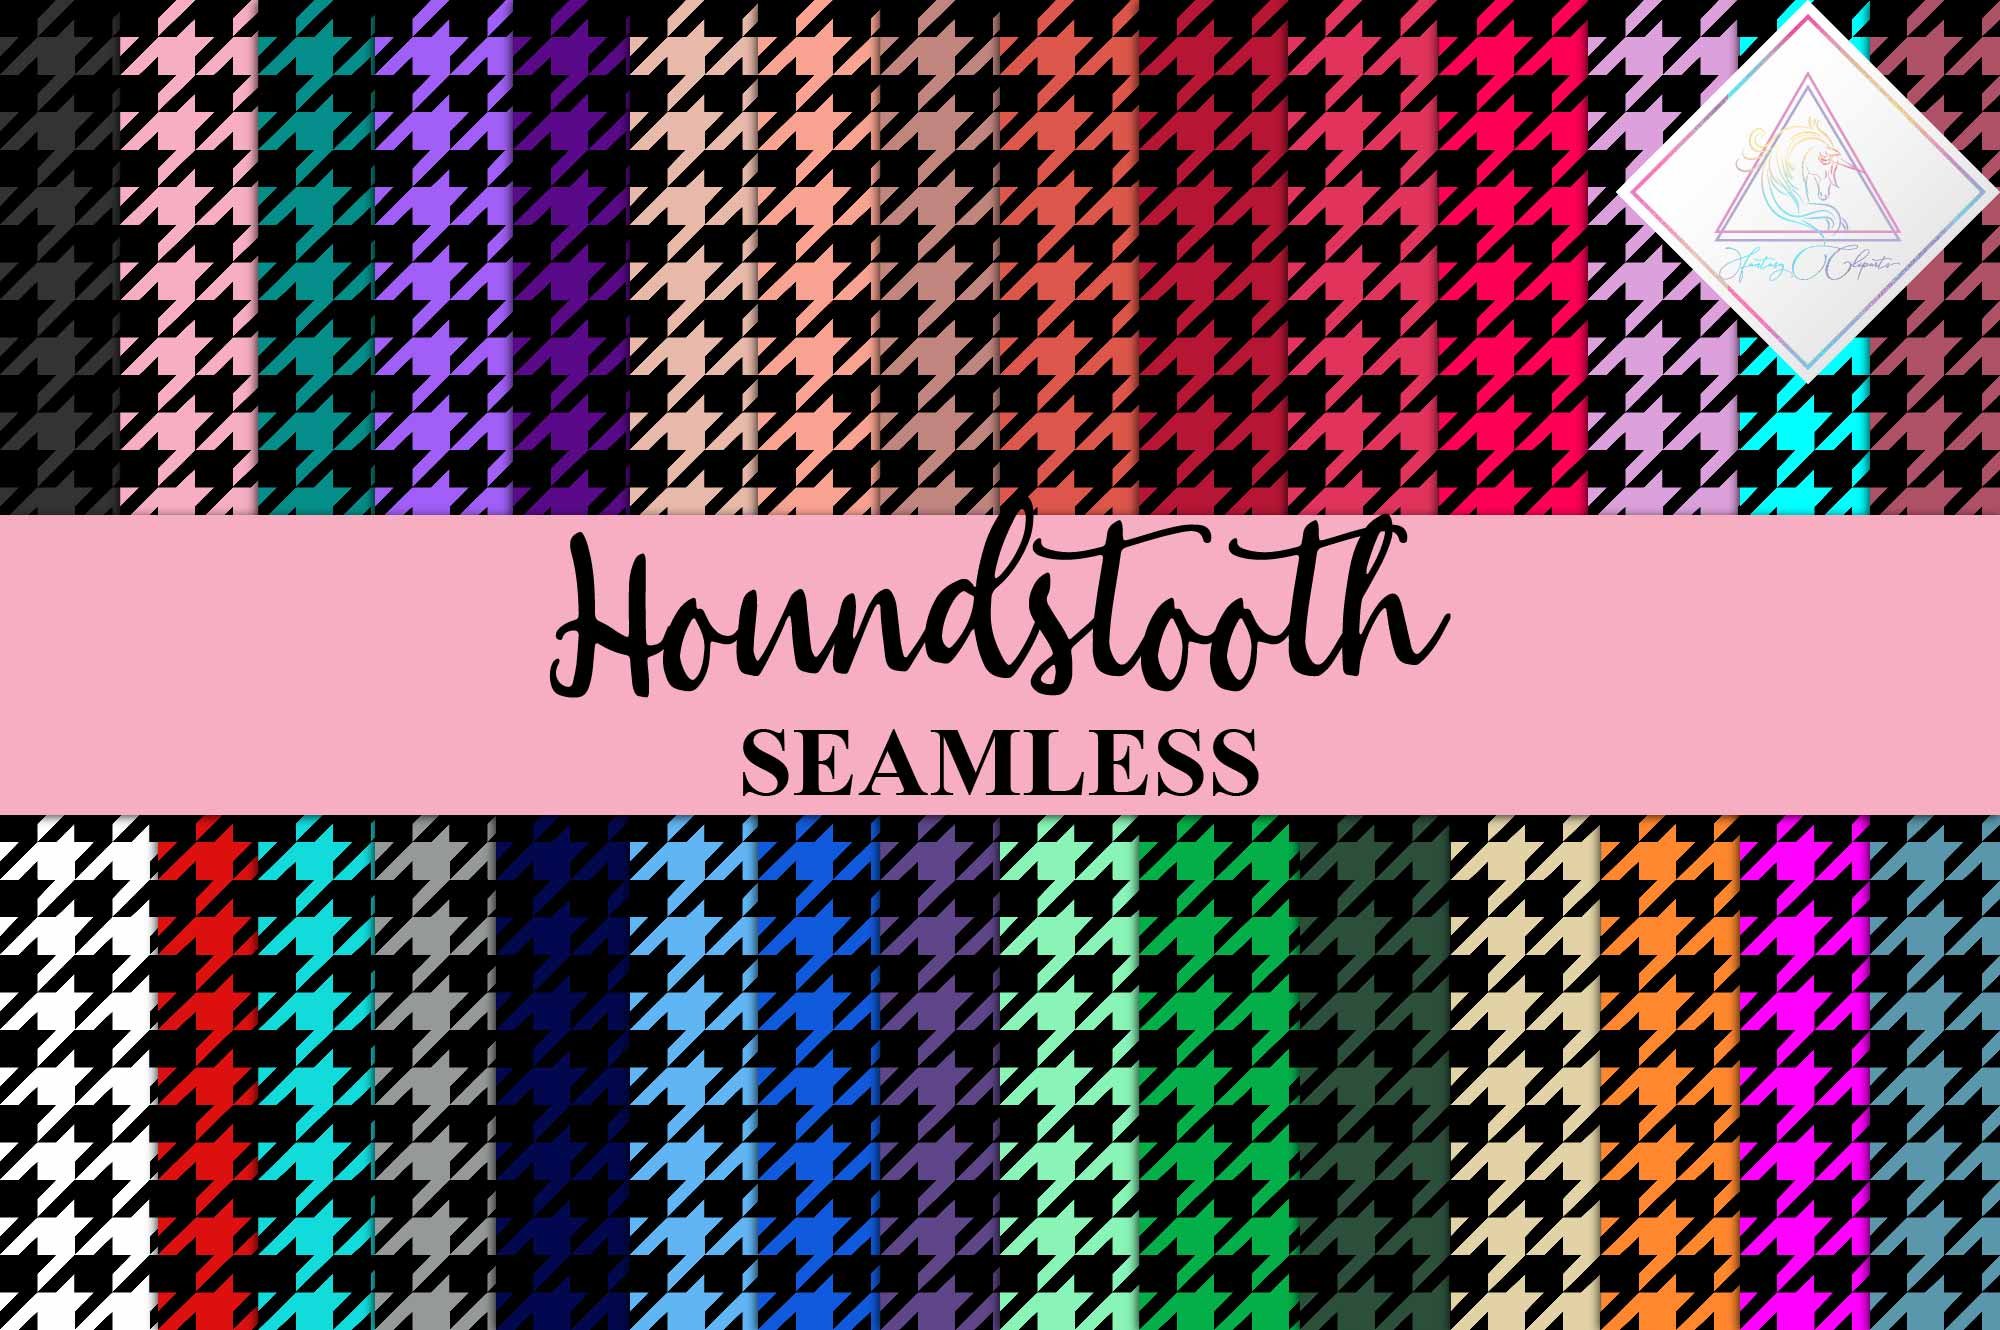 Houndstooth Digital Paper cover image.